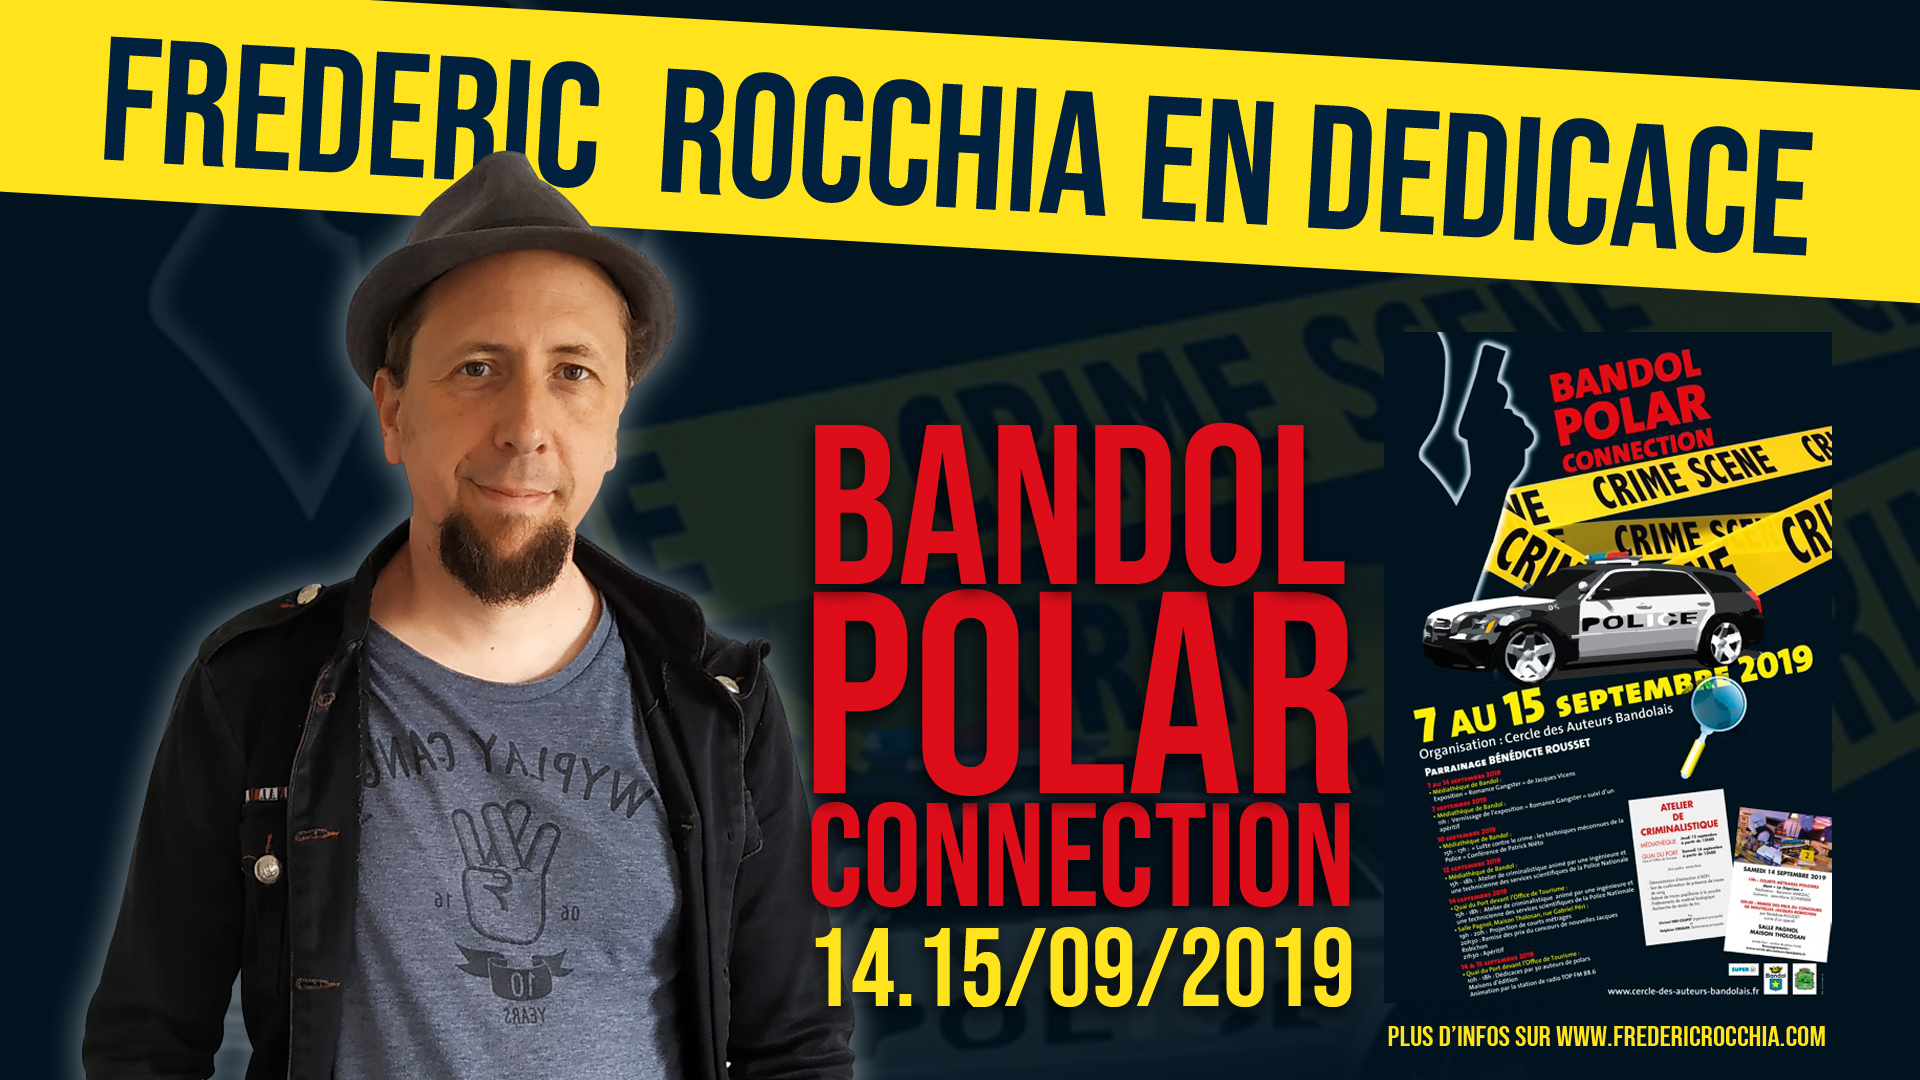 Dedicace-Bandol Polar Connection